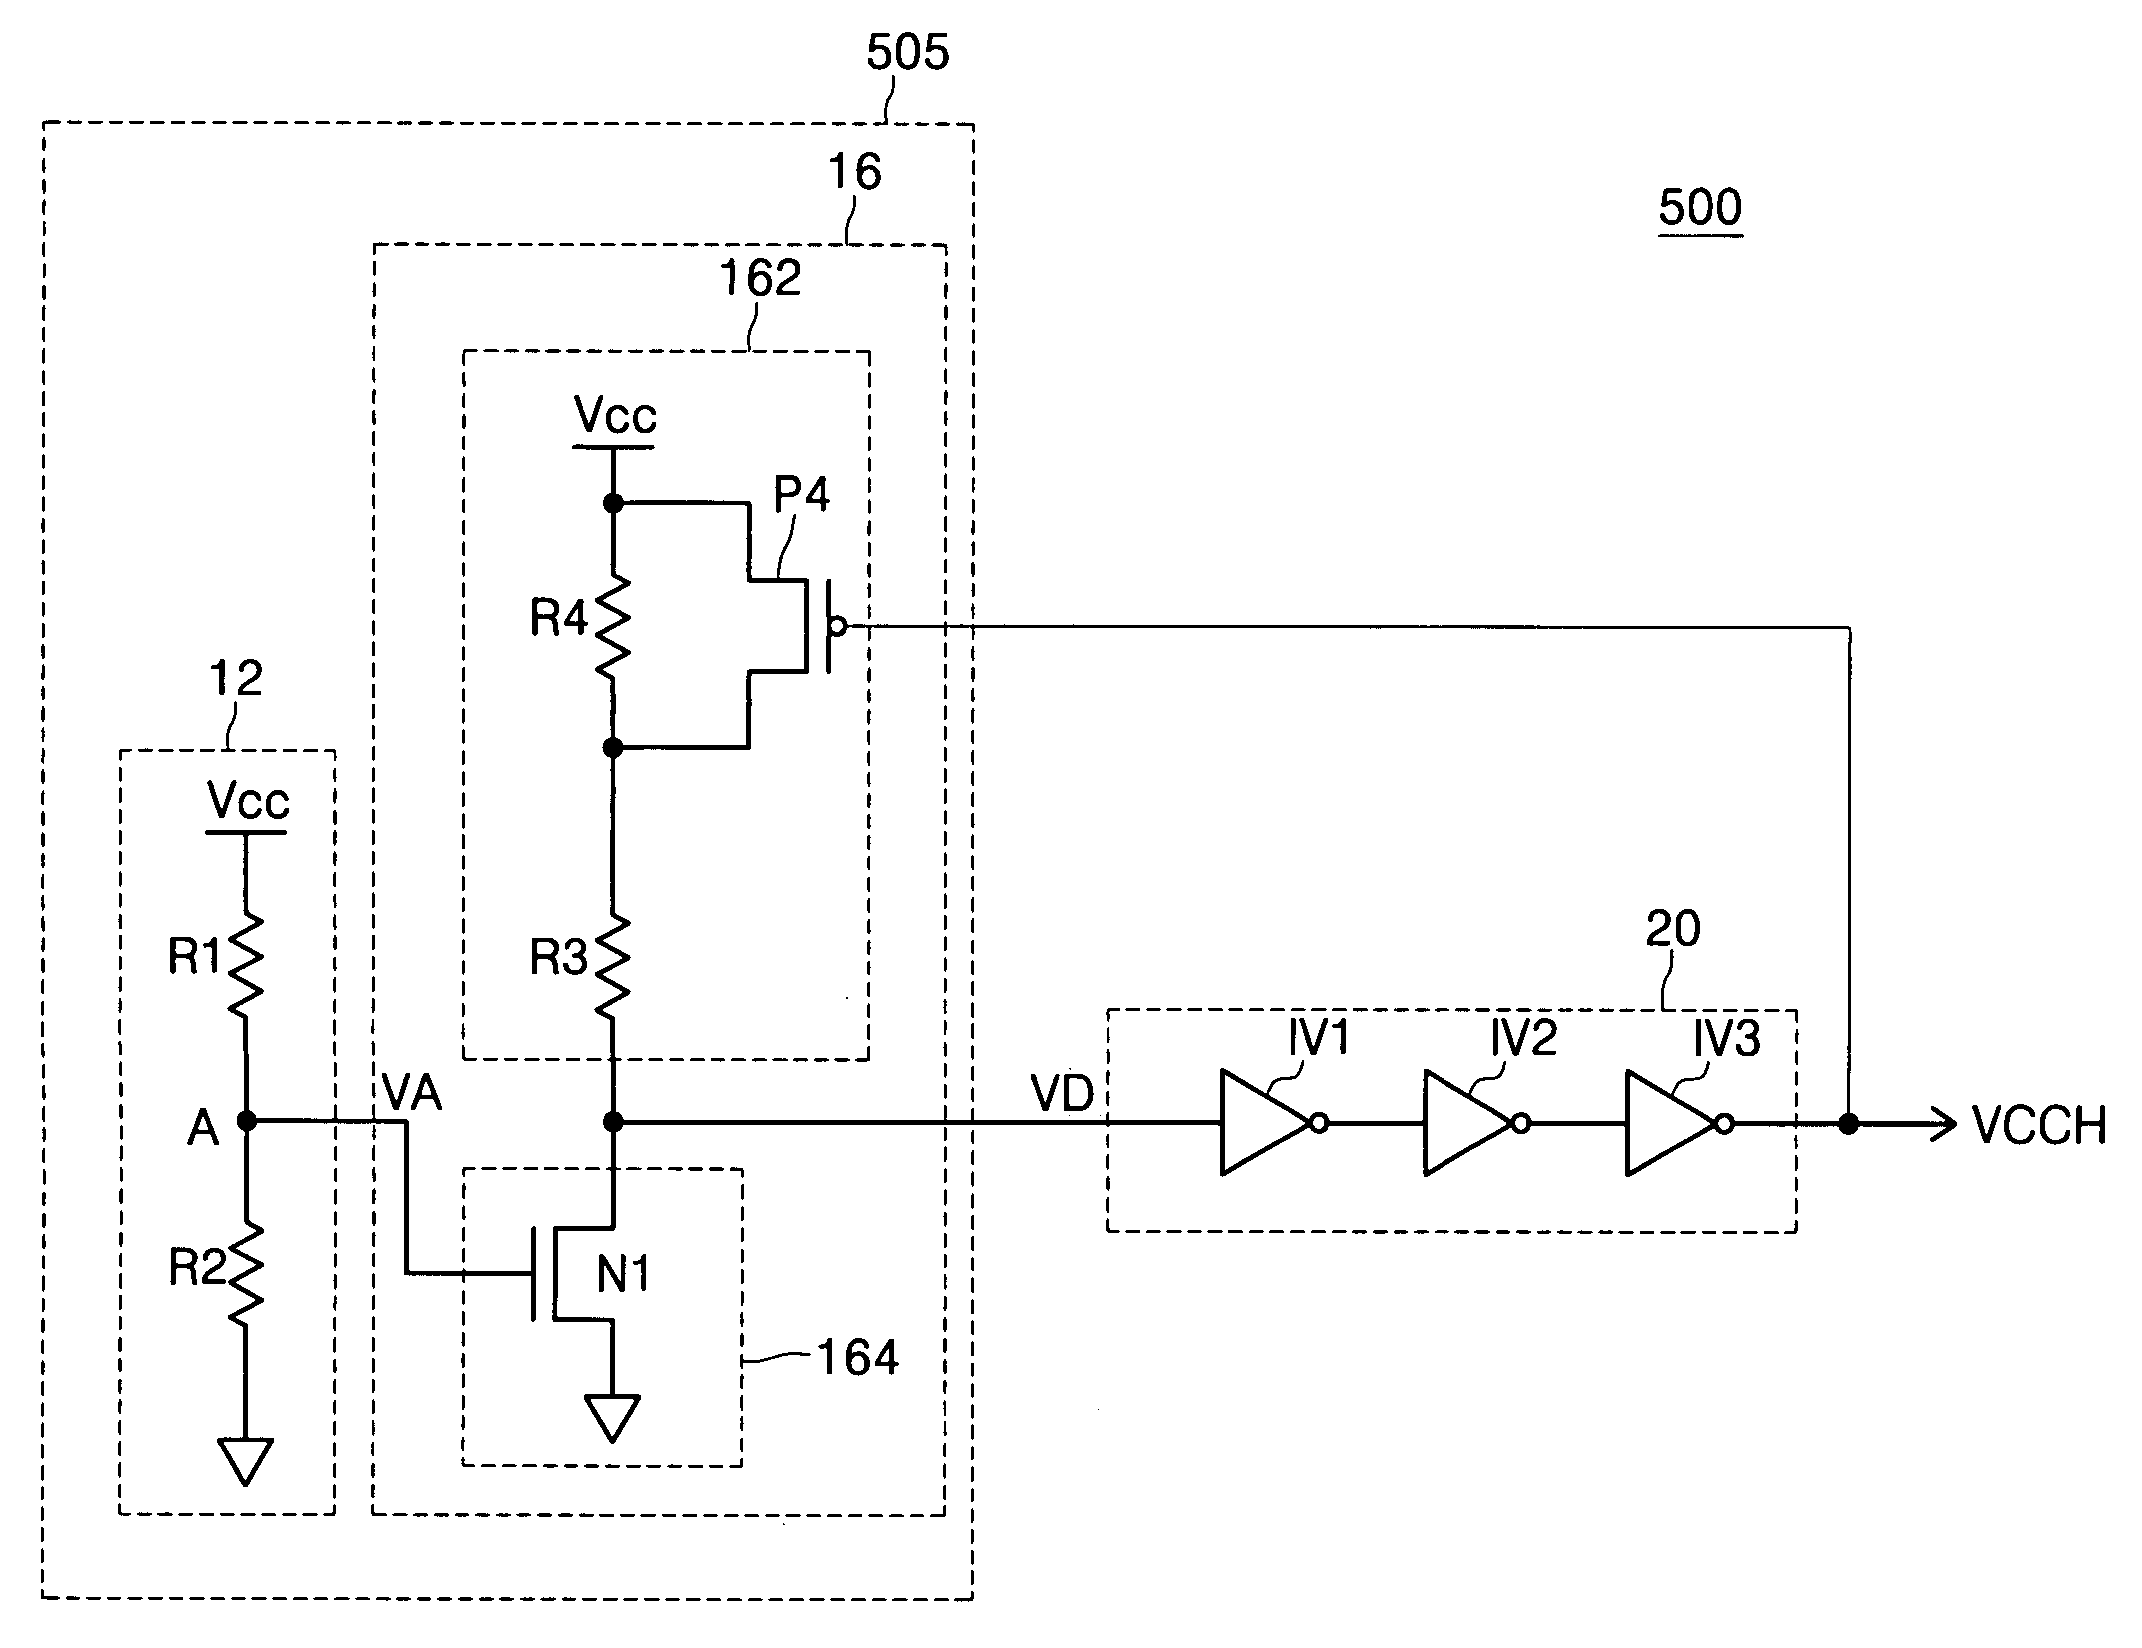 Power-up reset circuit